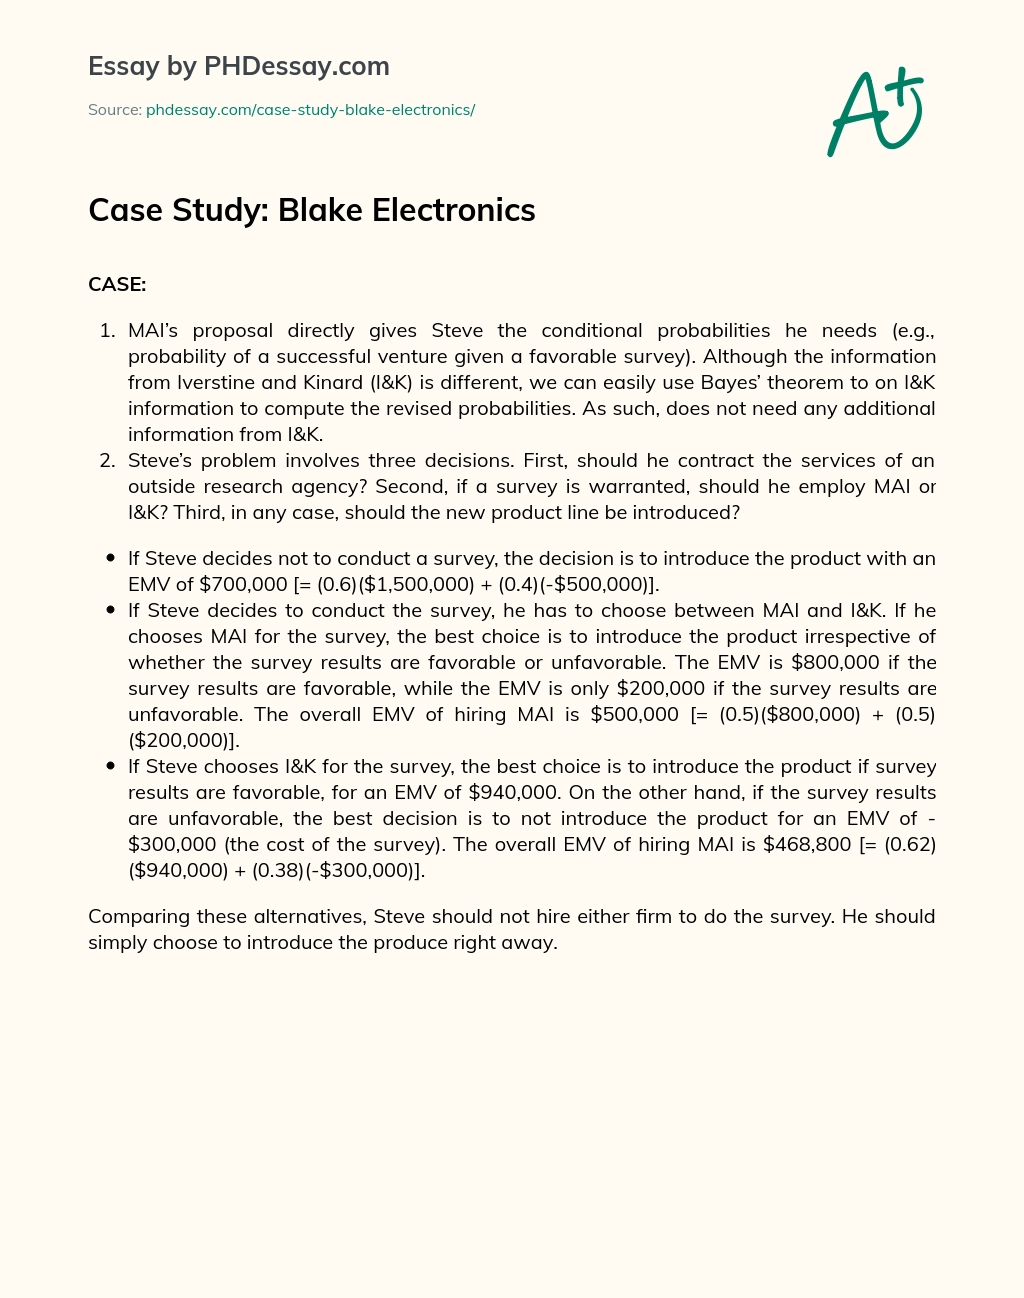 Case Study: Blake Electronics essay